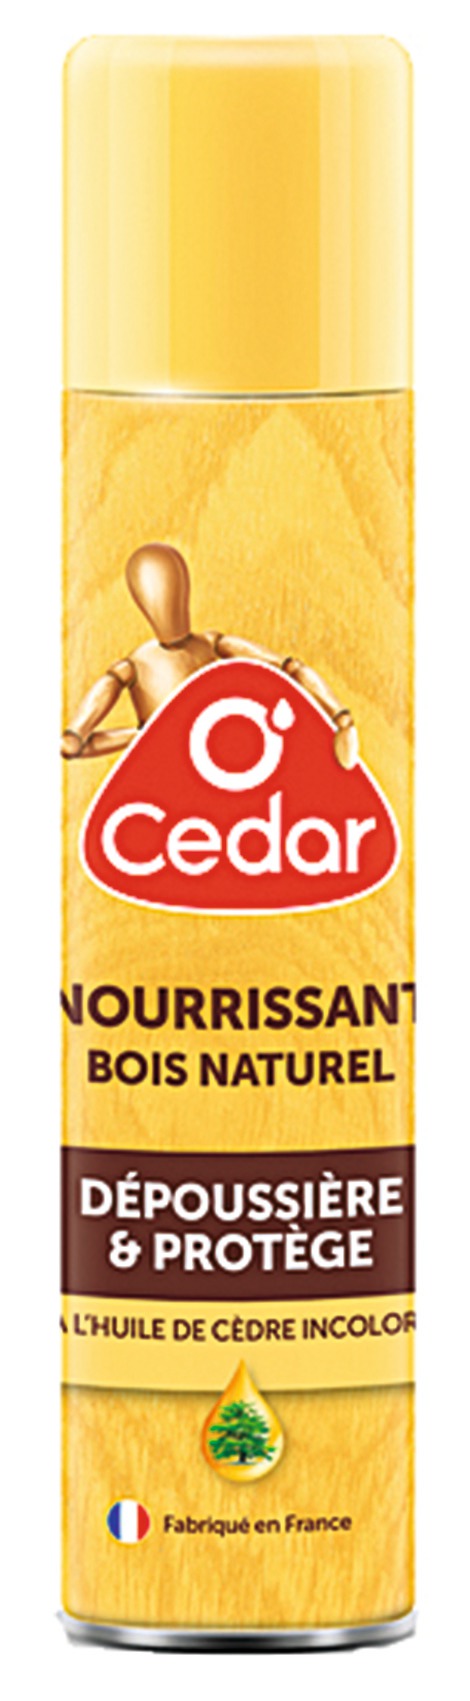 Nourrissant bois naturel O’Cedar - Aérosol 300 ml